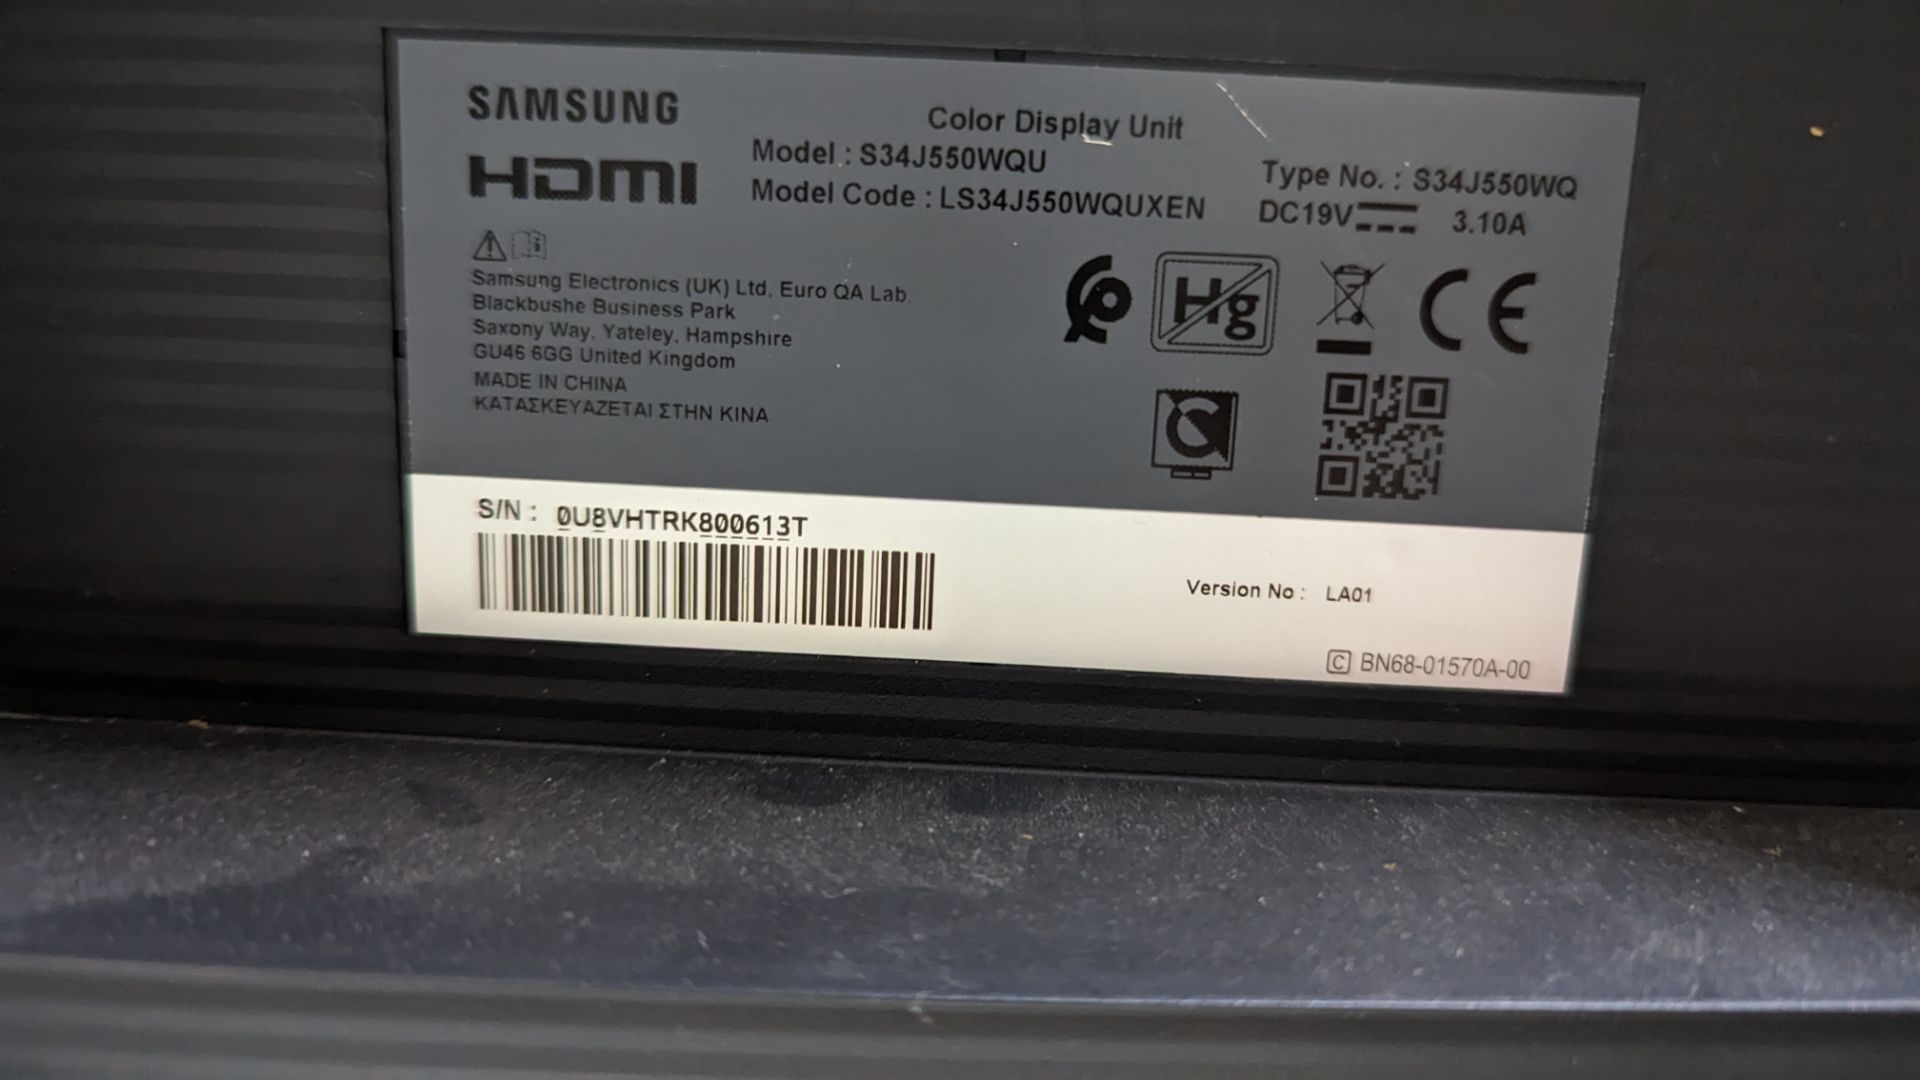 Samsung 34" ultra wide HDMI monitor model S34J550WQU - Image 8 of 10